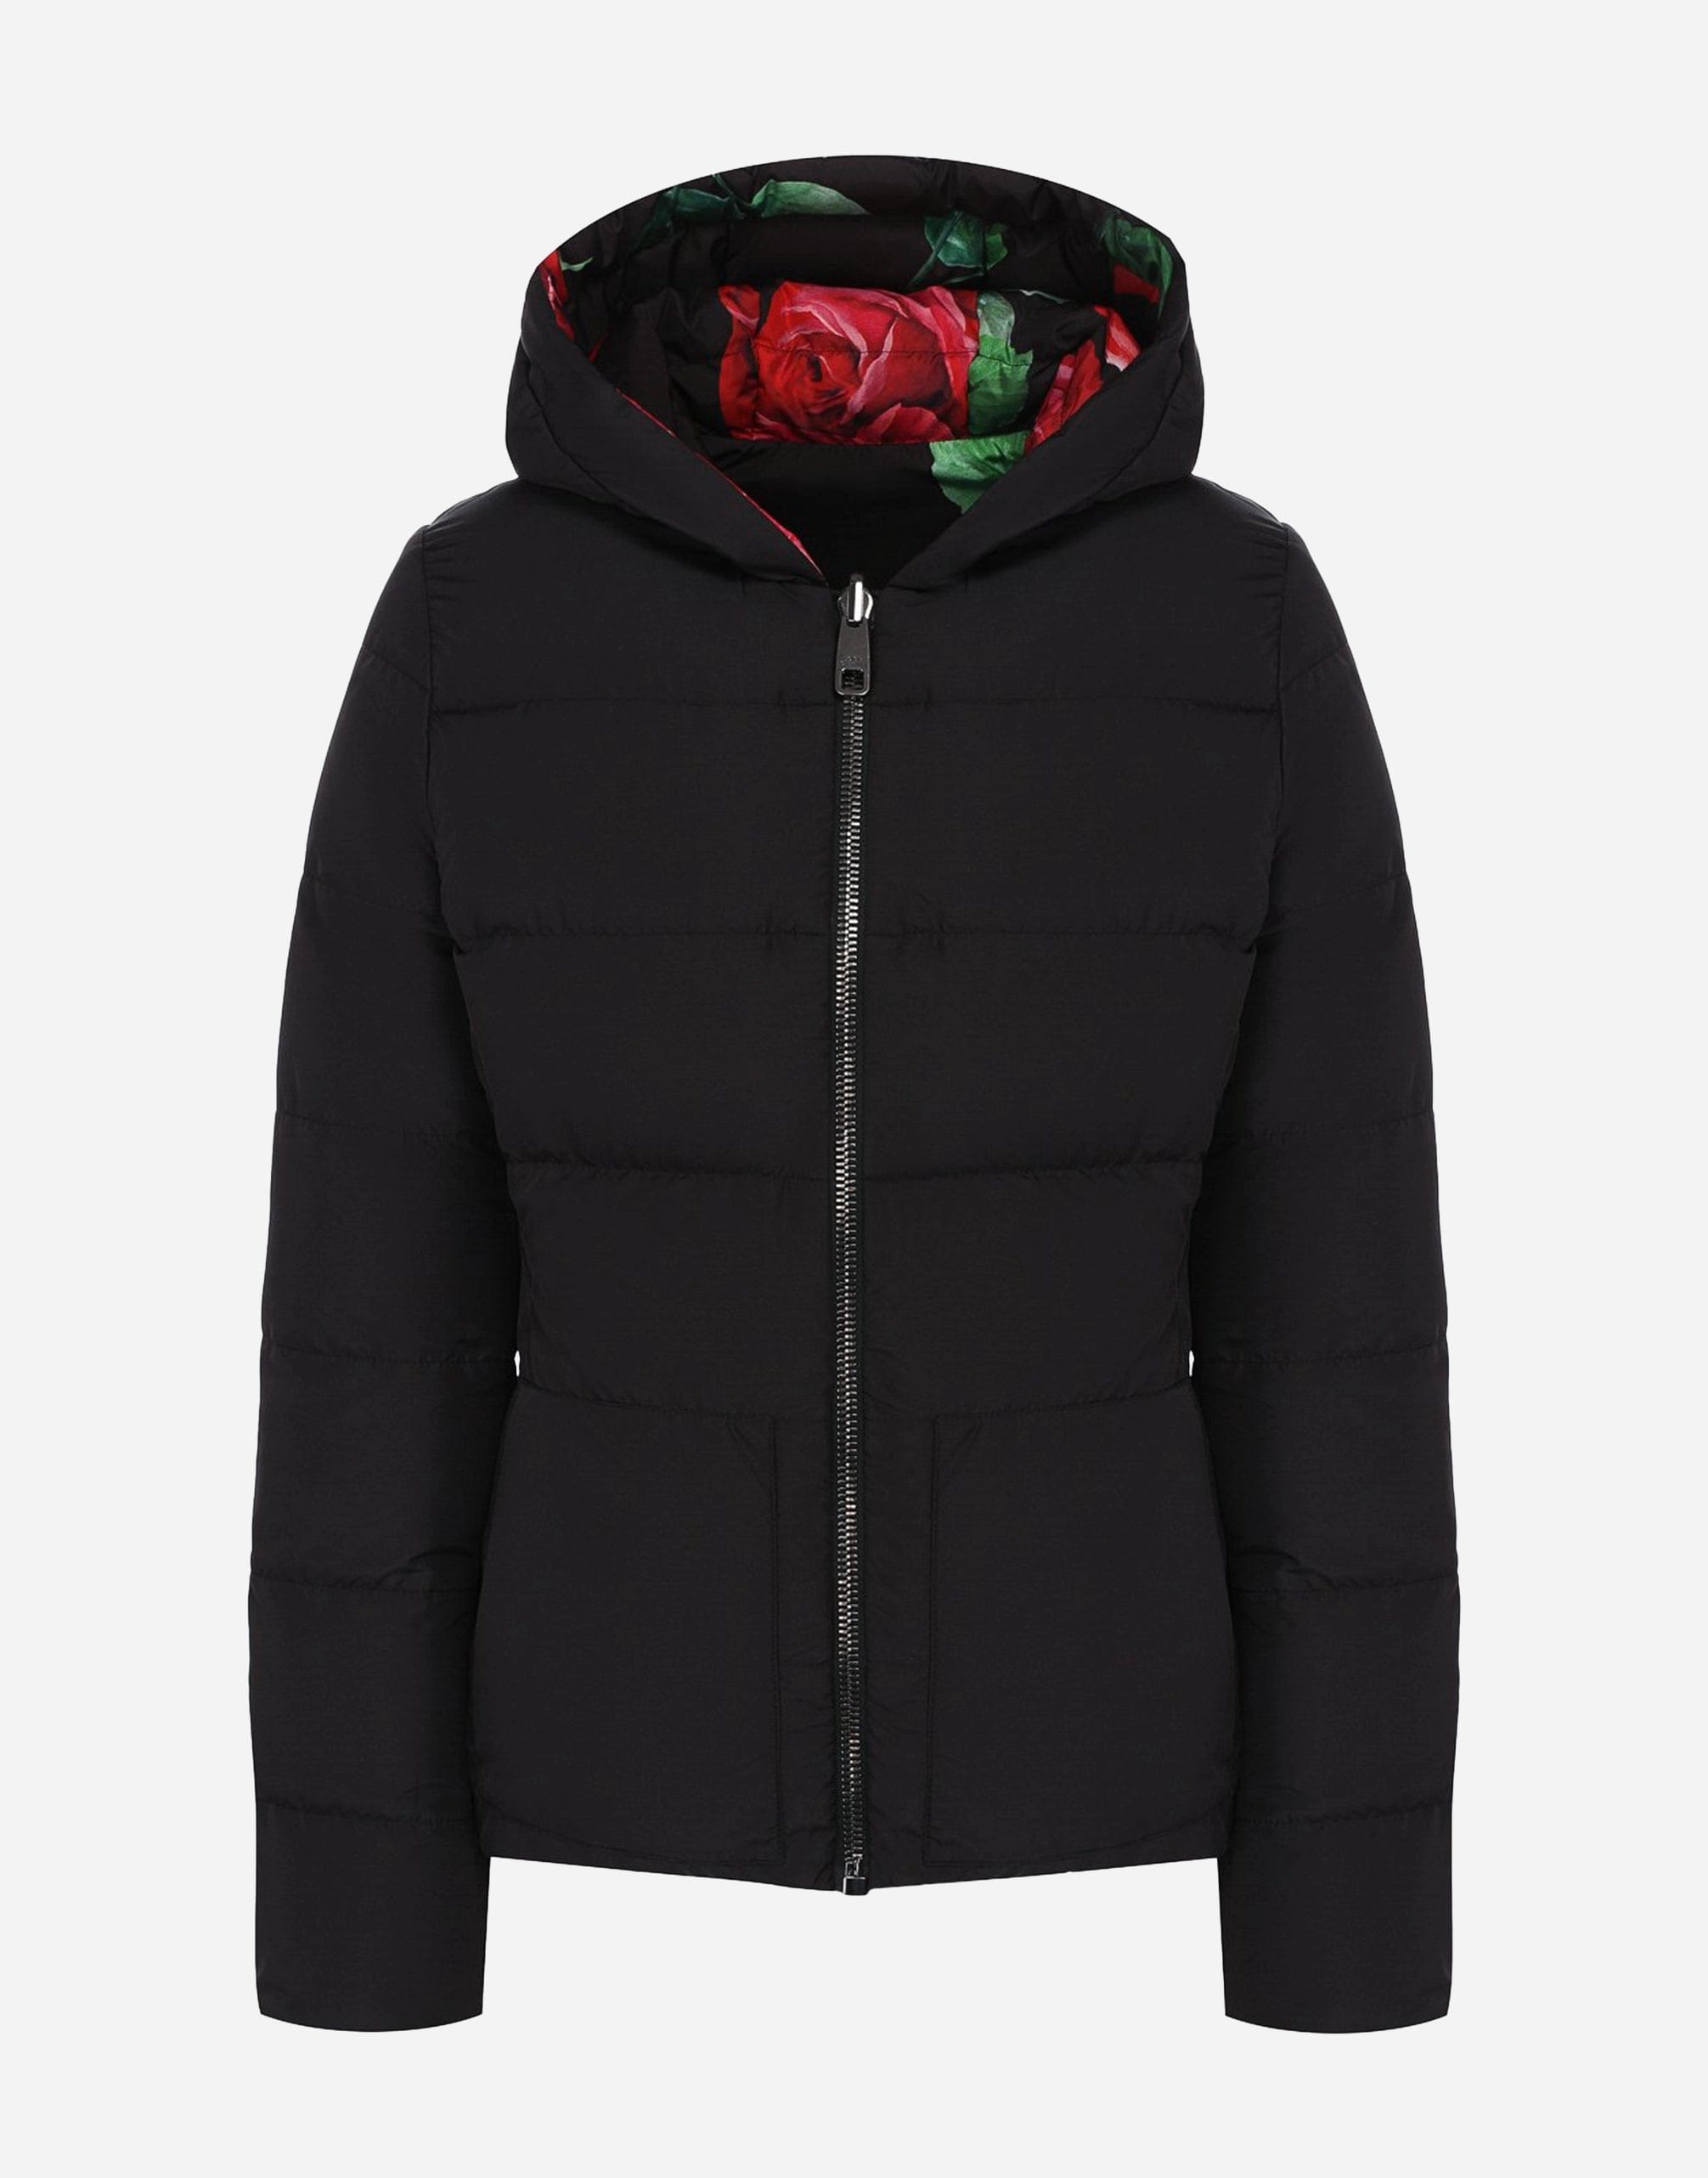 Dolce & Gabbana Rose Print Puffer Jacket